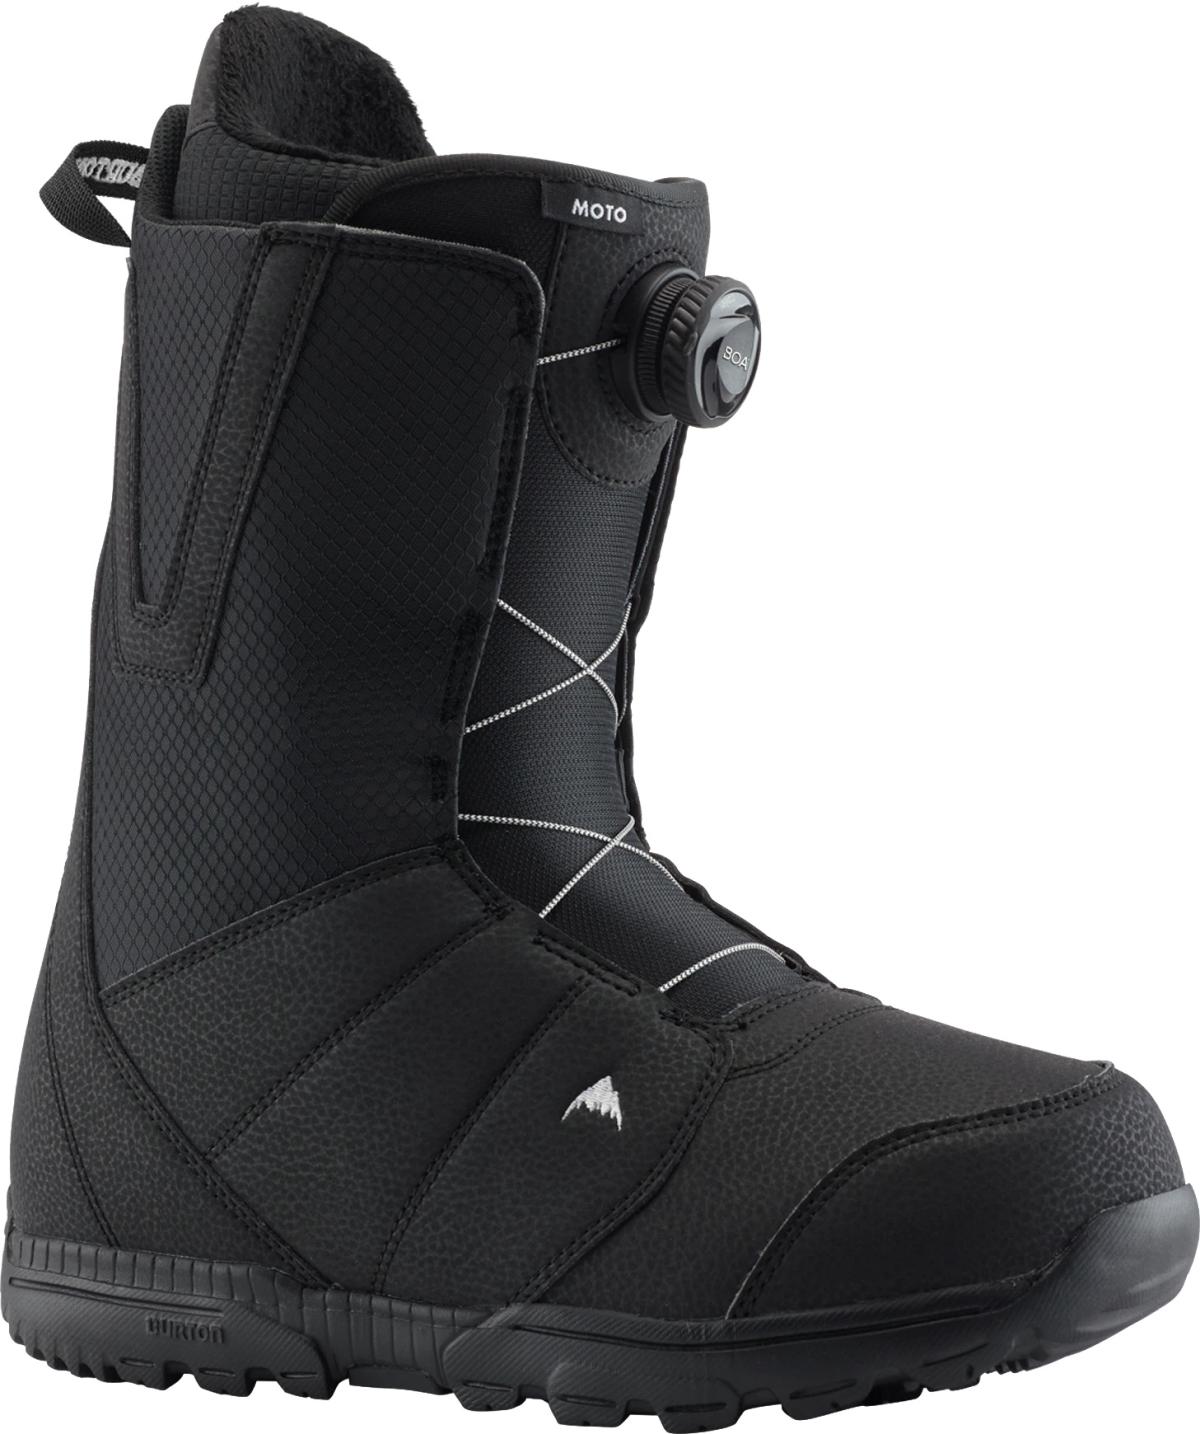 Burton Moto Boa snowboard boots